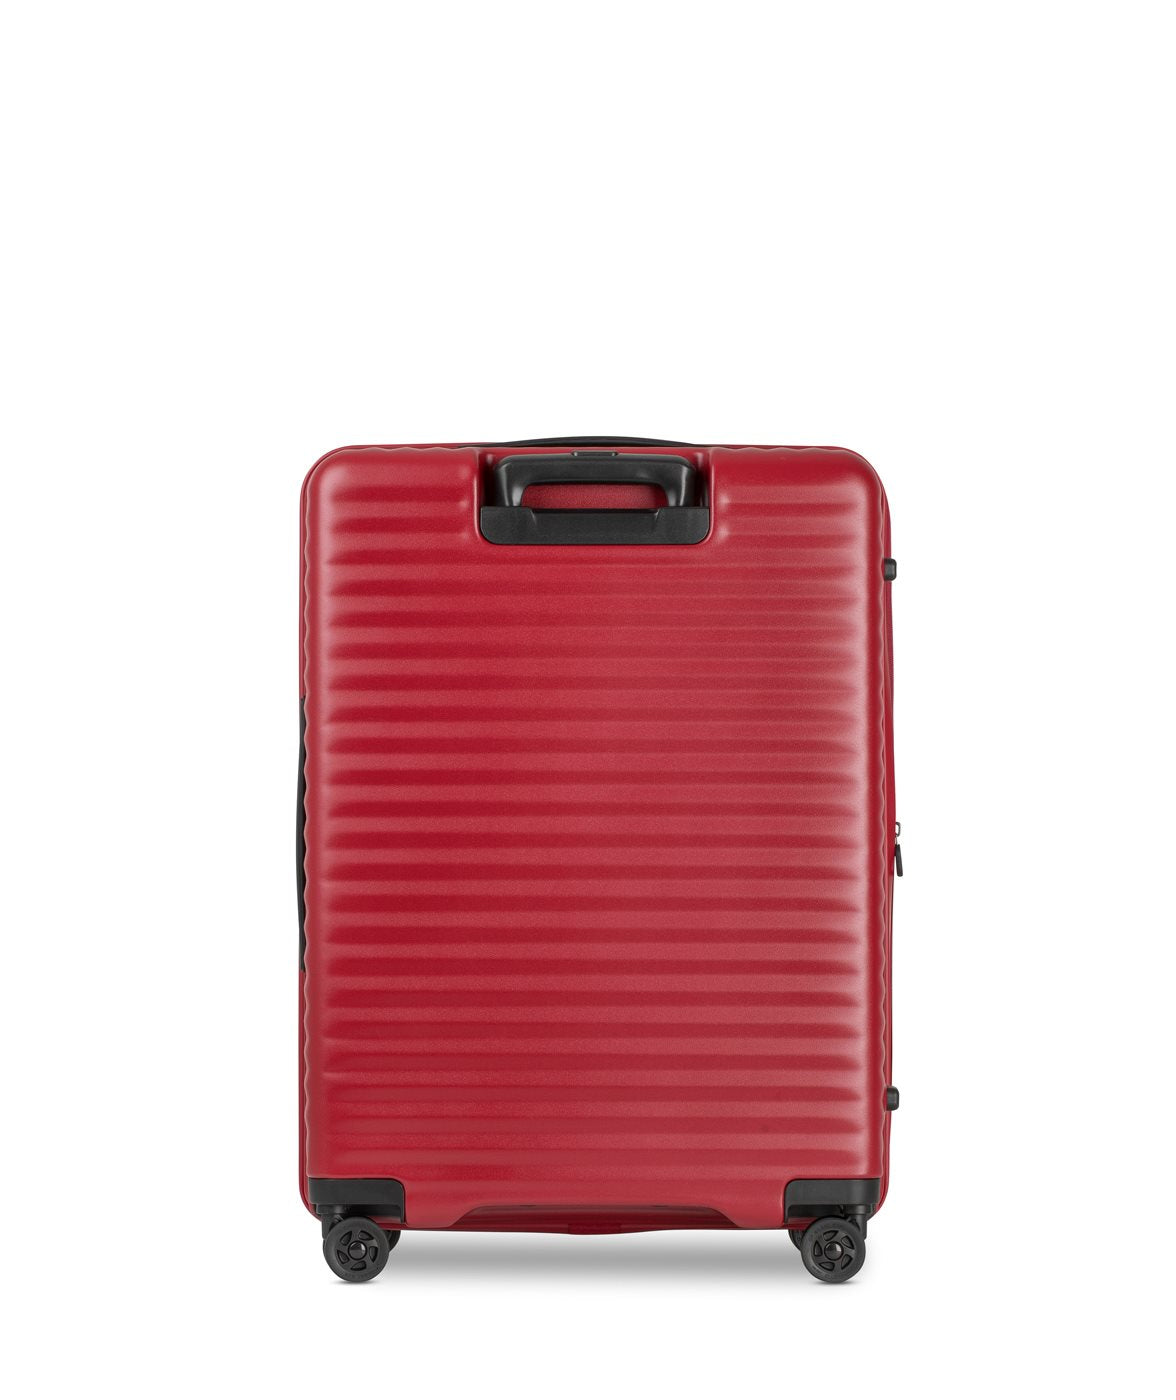 Echolac Celestra 4-Wheel Luggage Echolac - M - Red Ruimbagage Koffer - Reisartikelen-nl